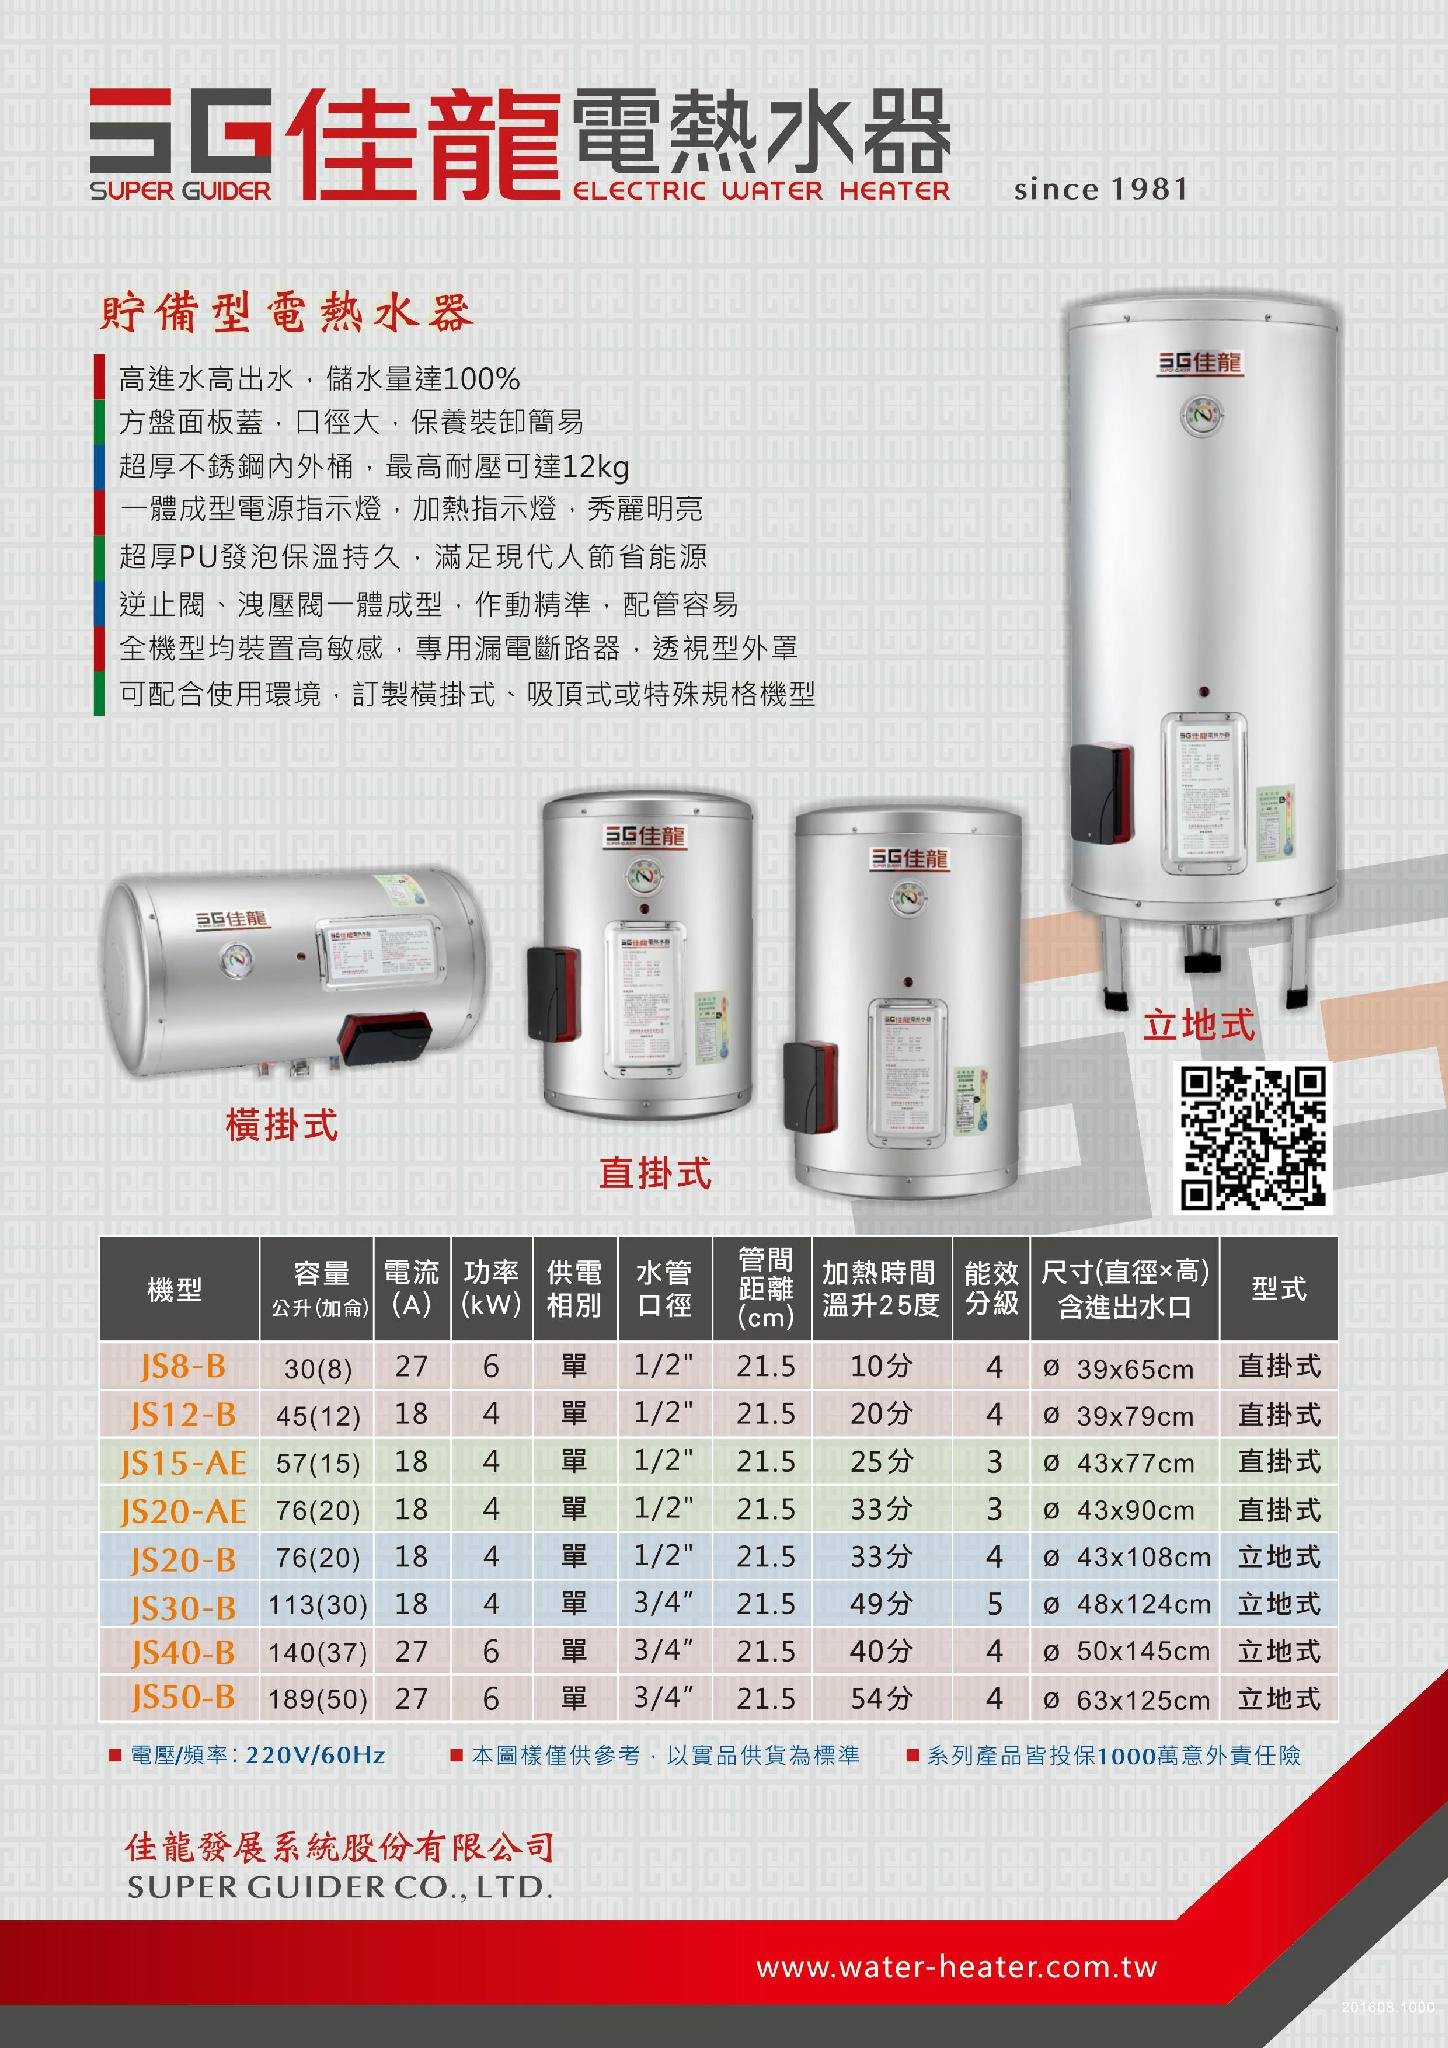 Super Guider Electric Water Heater Vertical-Wall Series JS8-B 2